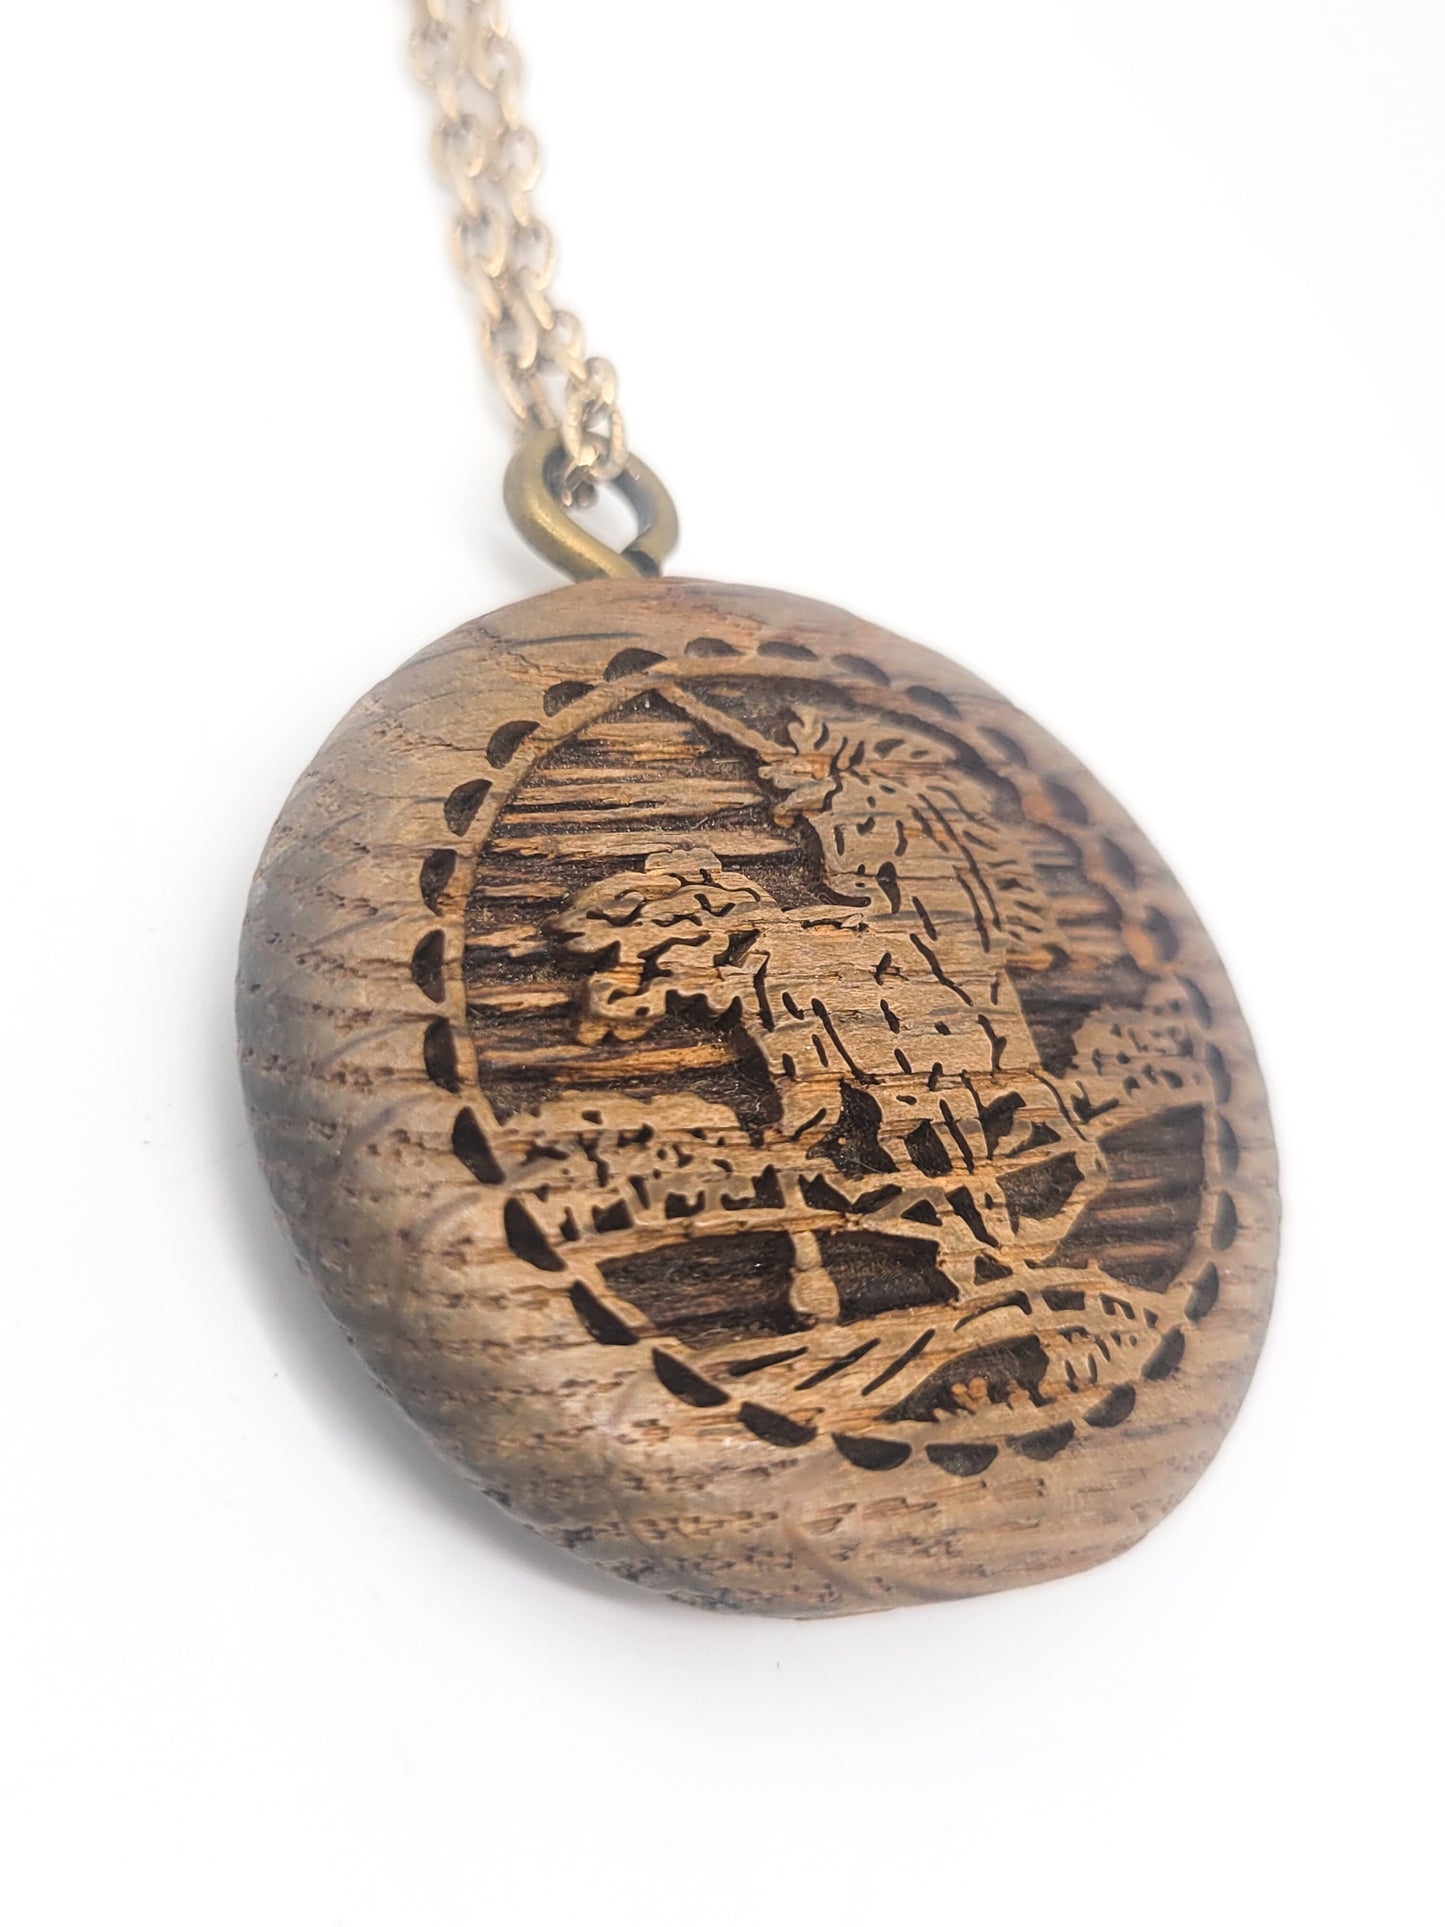 Carved Unicorn vintage folk art wooden pendant necklace